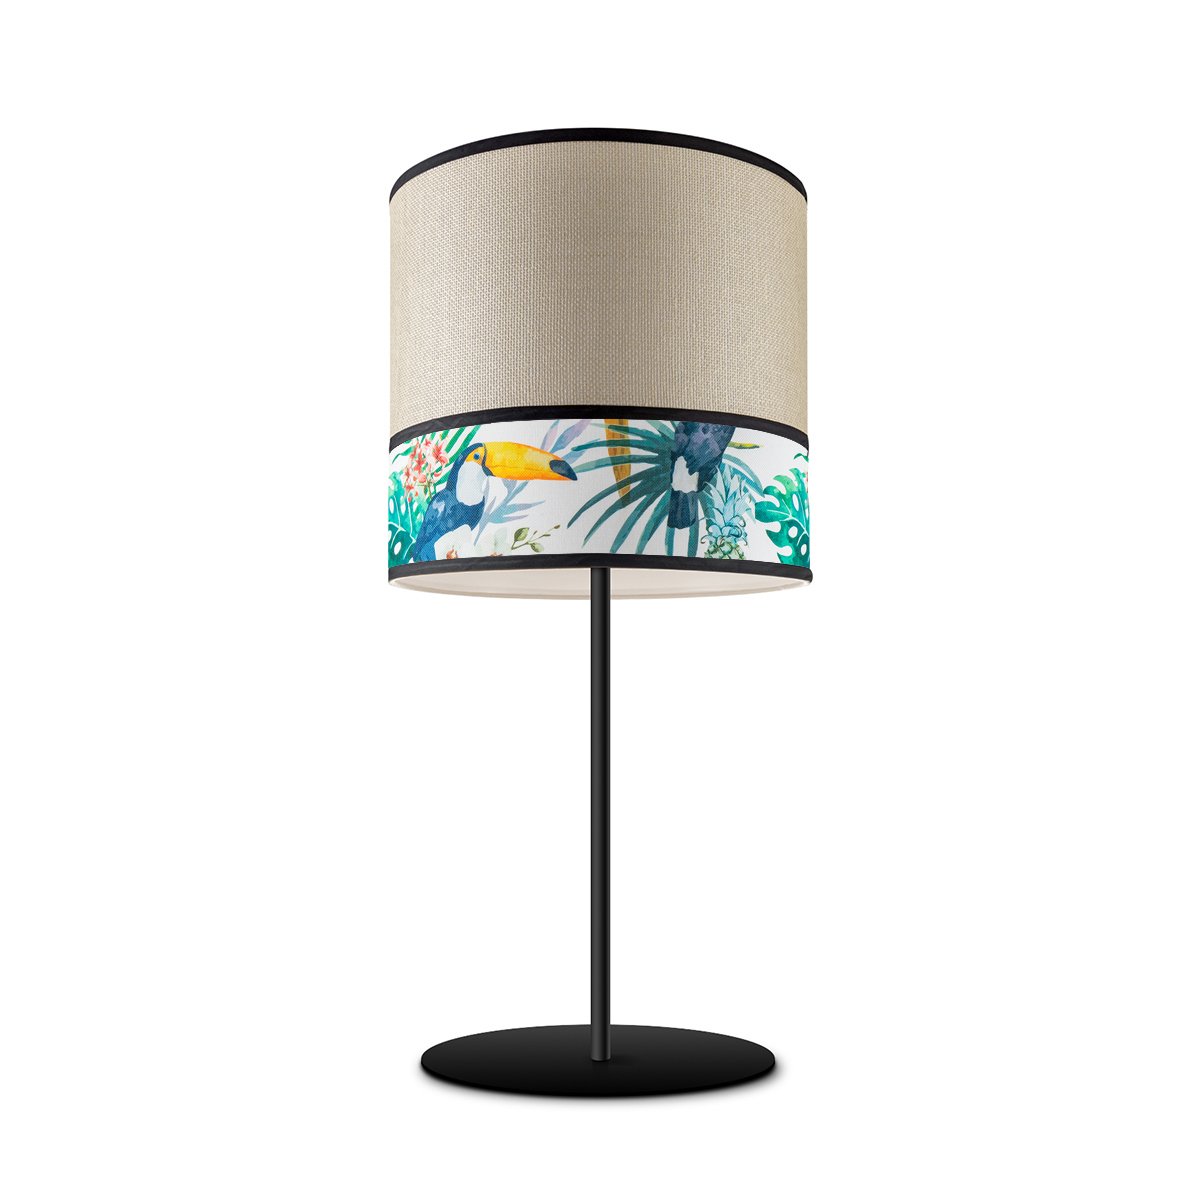 Tangla lighting - TLT7041-25C - Table lamp 1 Light - metal + paper + TC fabric - spring - bird - E27